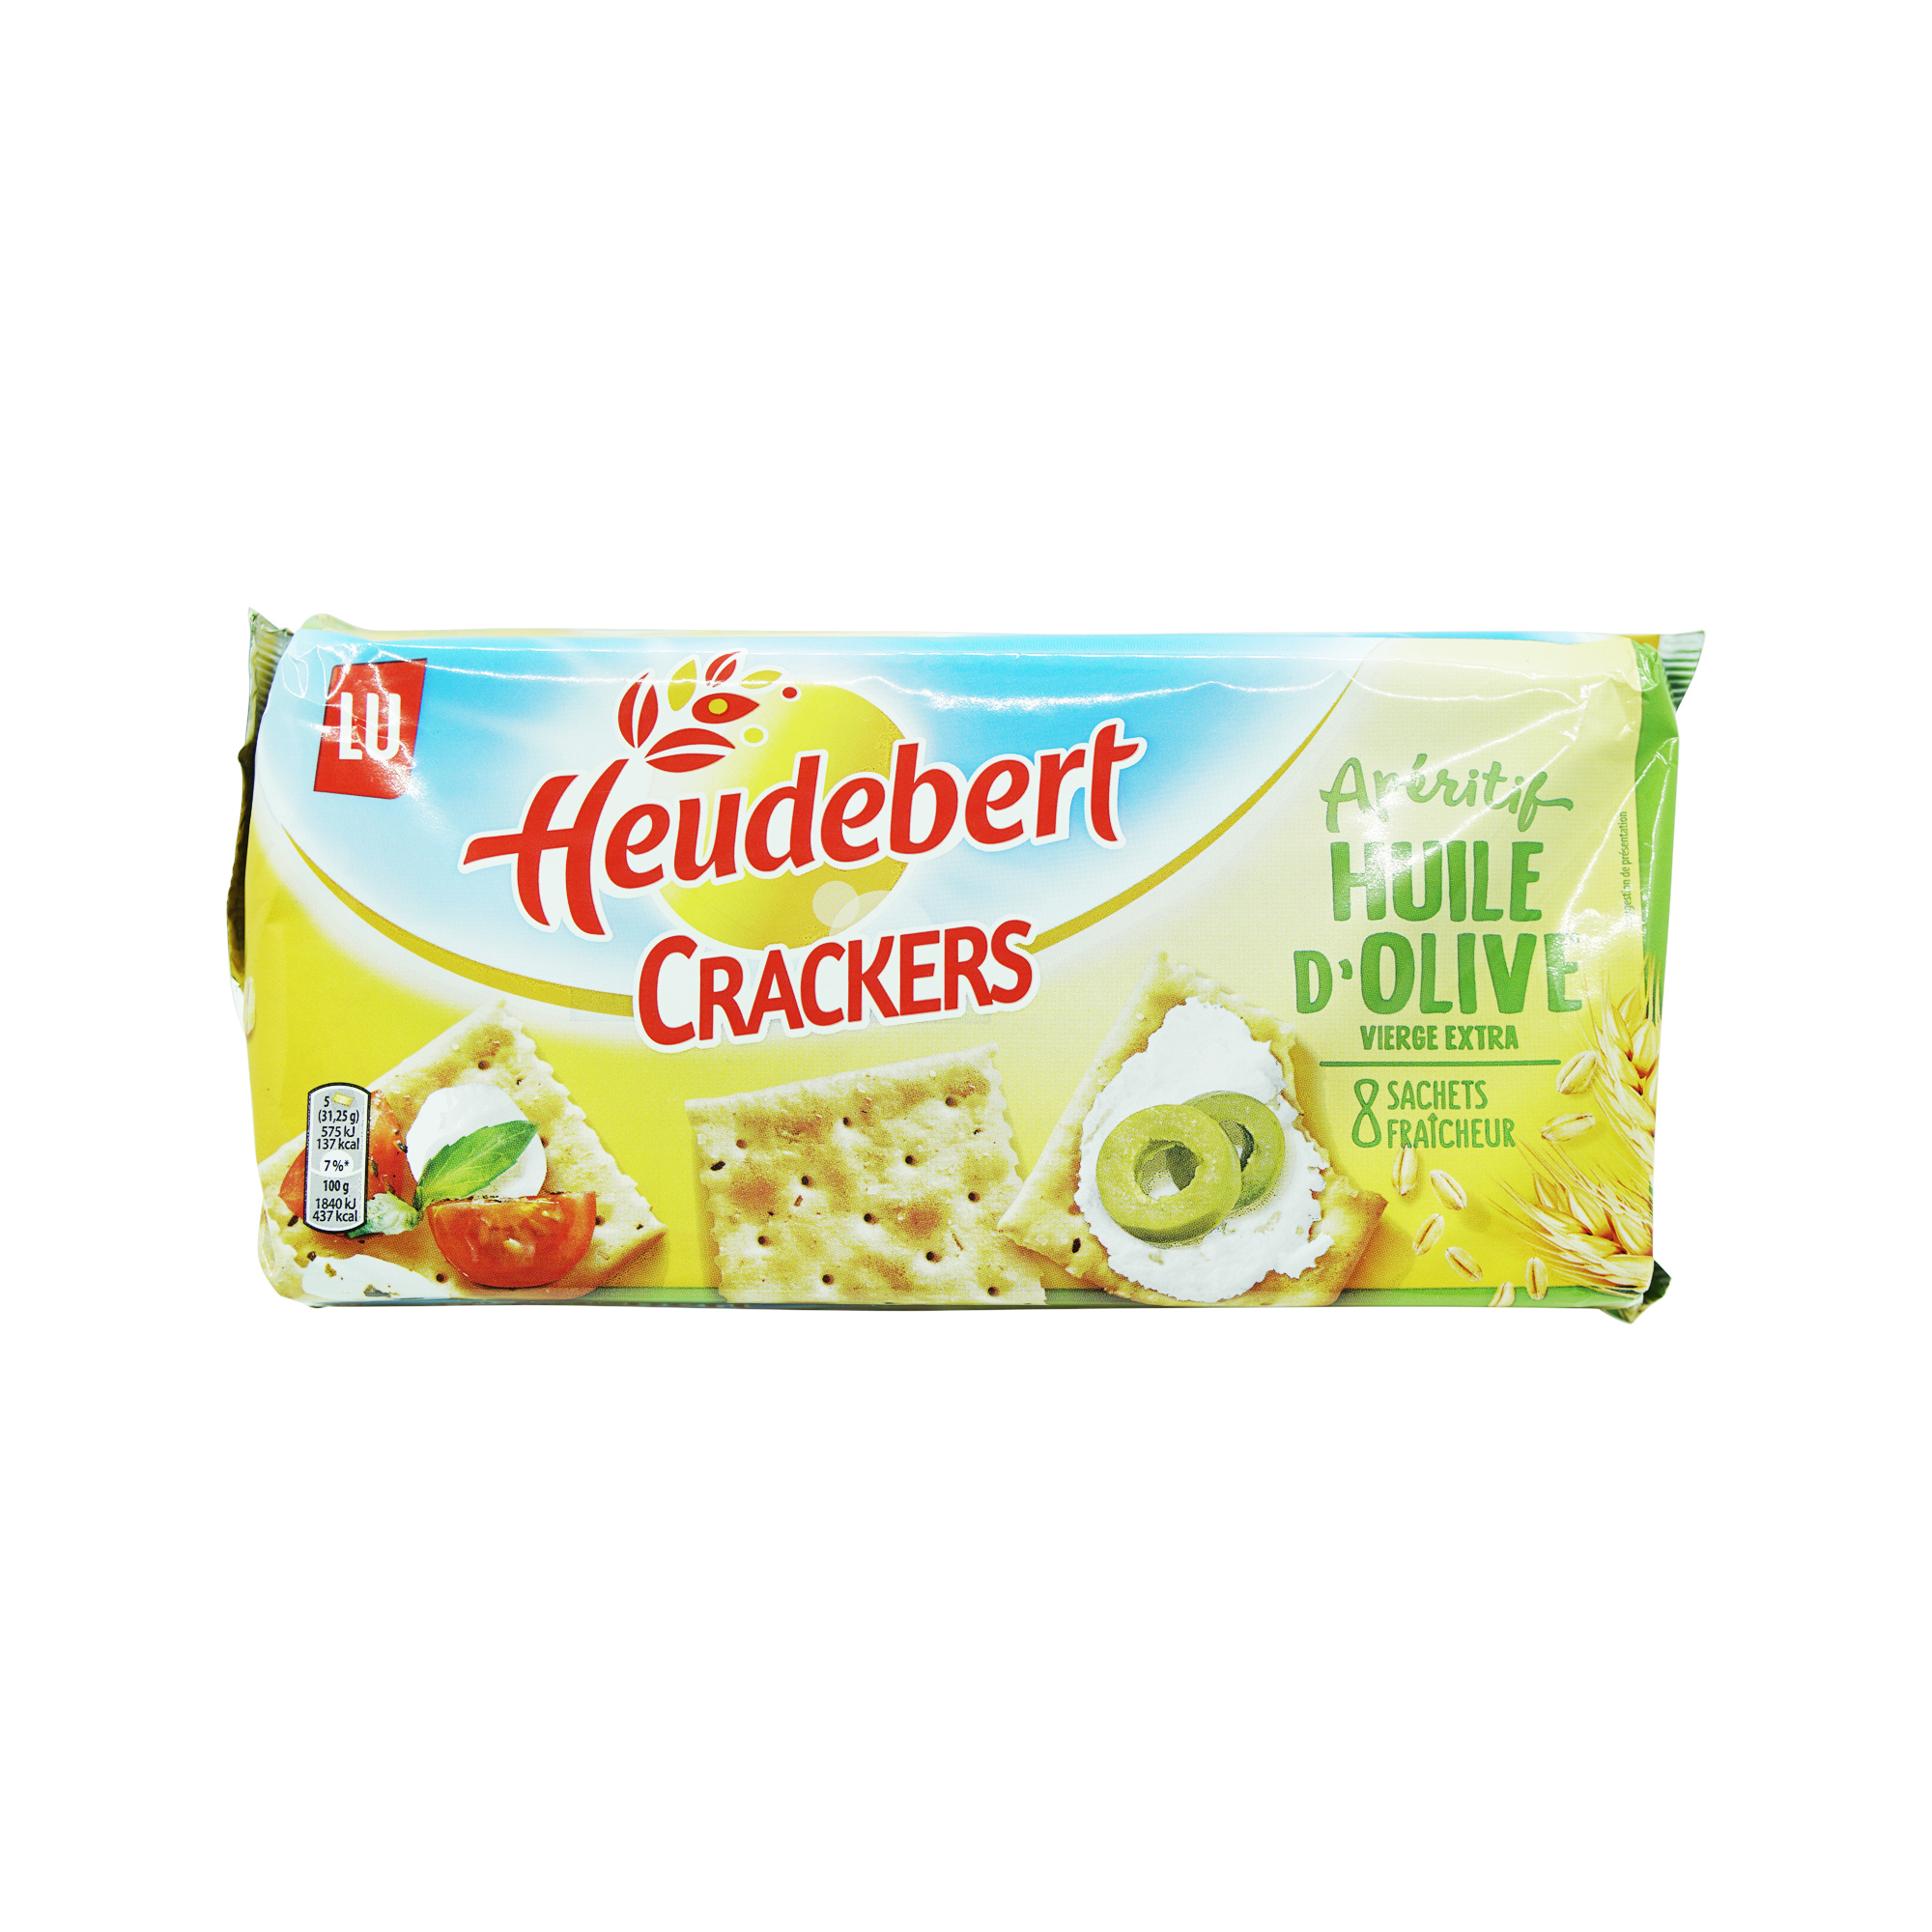 LU Heudebert Crackers Olive Oil (250g)